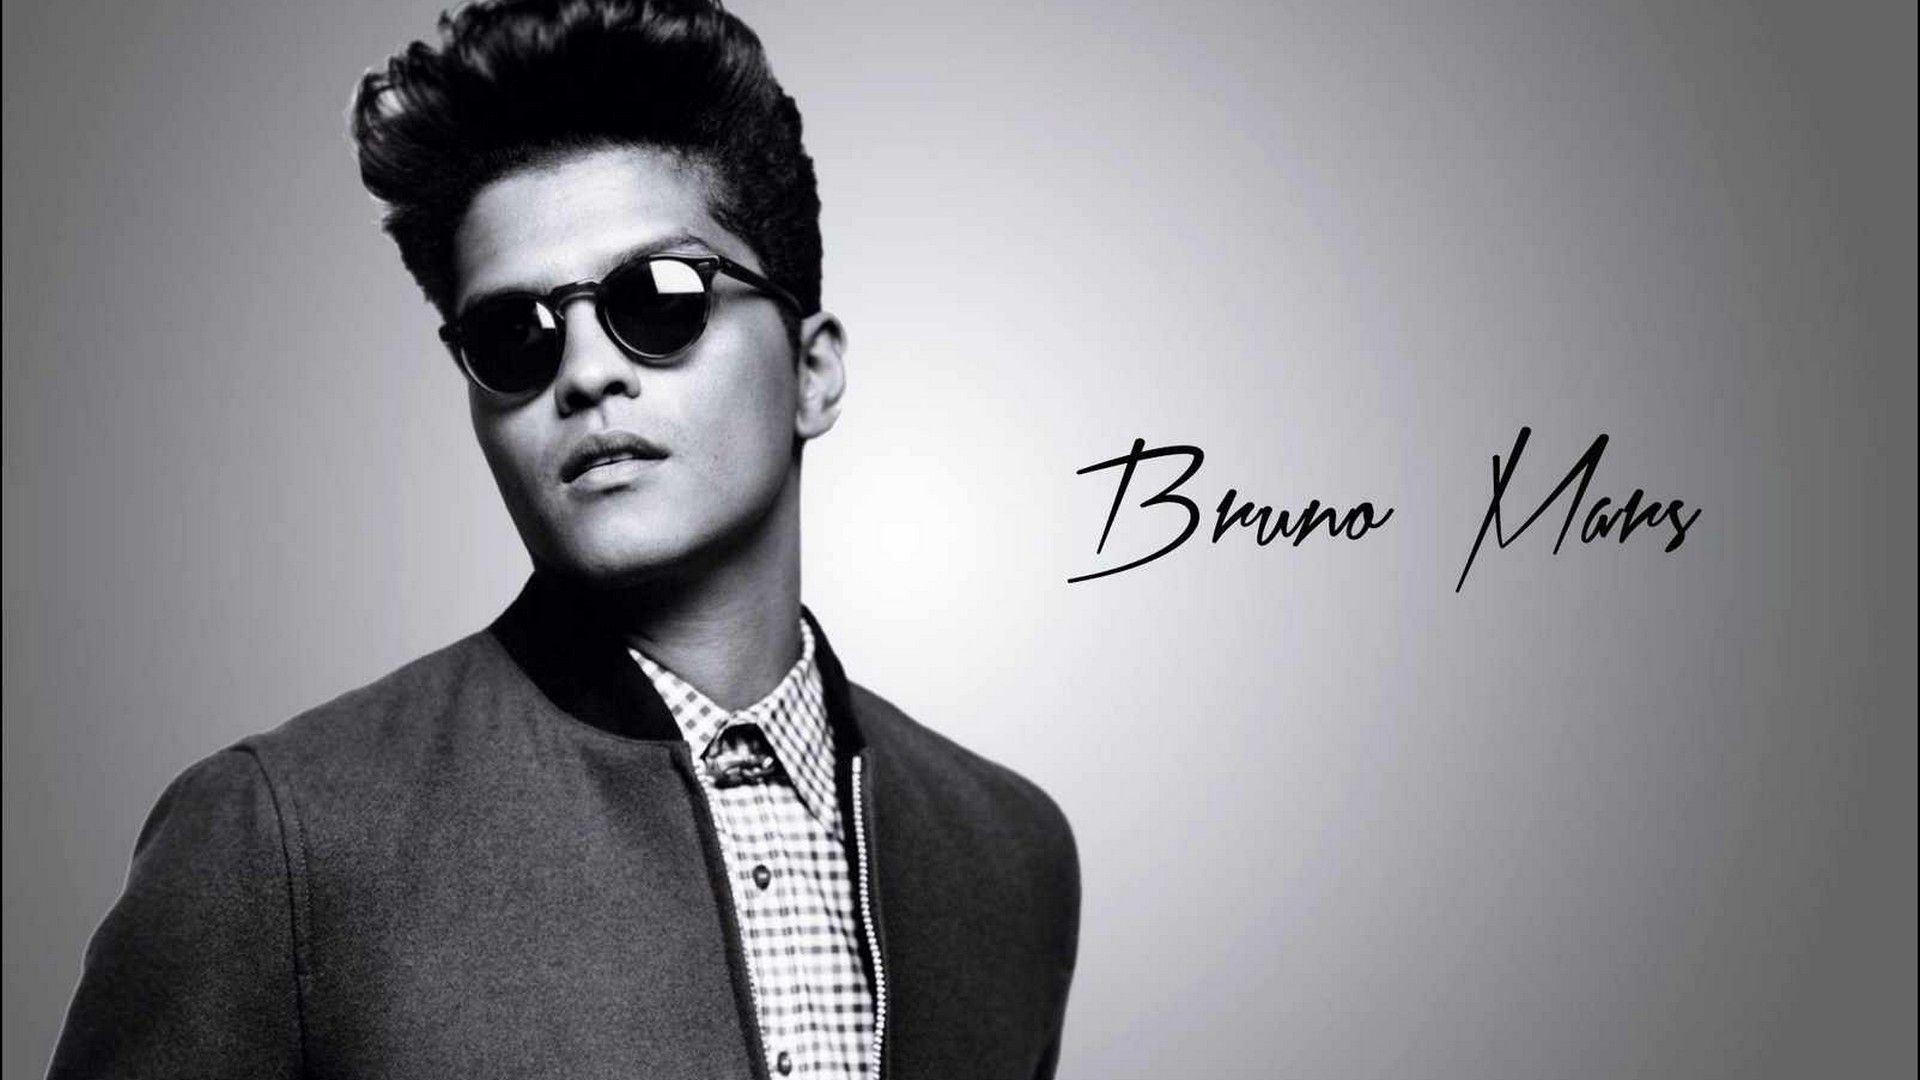 Bruno Mars Wallpaper Background Live Wallpaper HD. Mars wallpaper, Bruno mars, Bruno